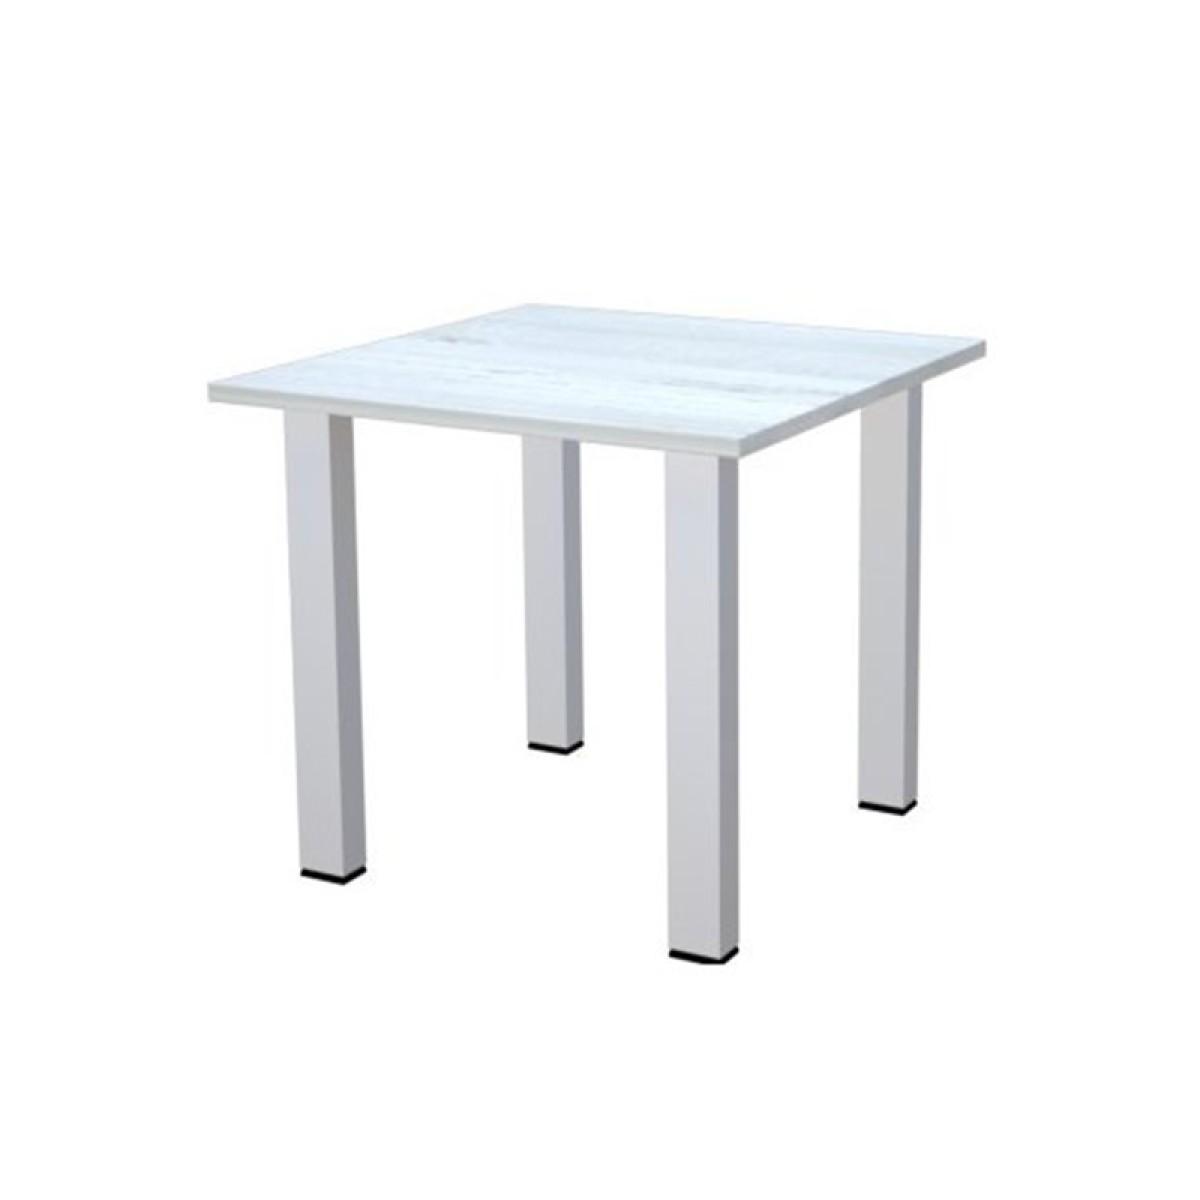 Стол НТ-160 сосна Винтер. Кухонный стол Винтер-2 Marble White. Картинки прямоугольного стола НТ 120 сосна Винтер.